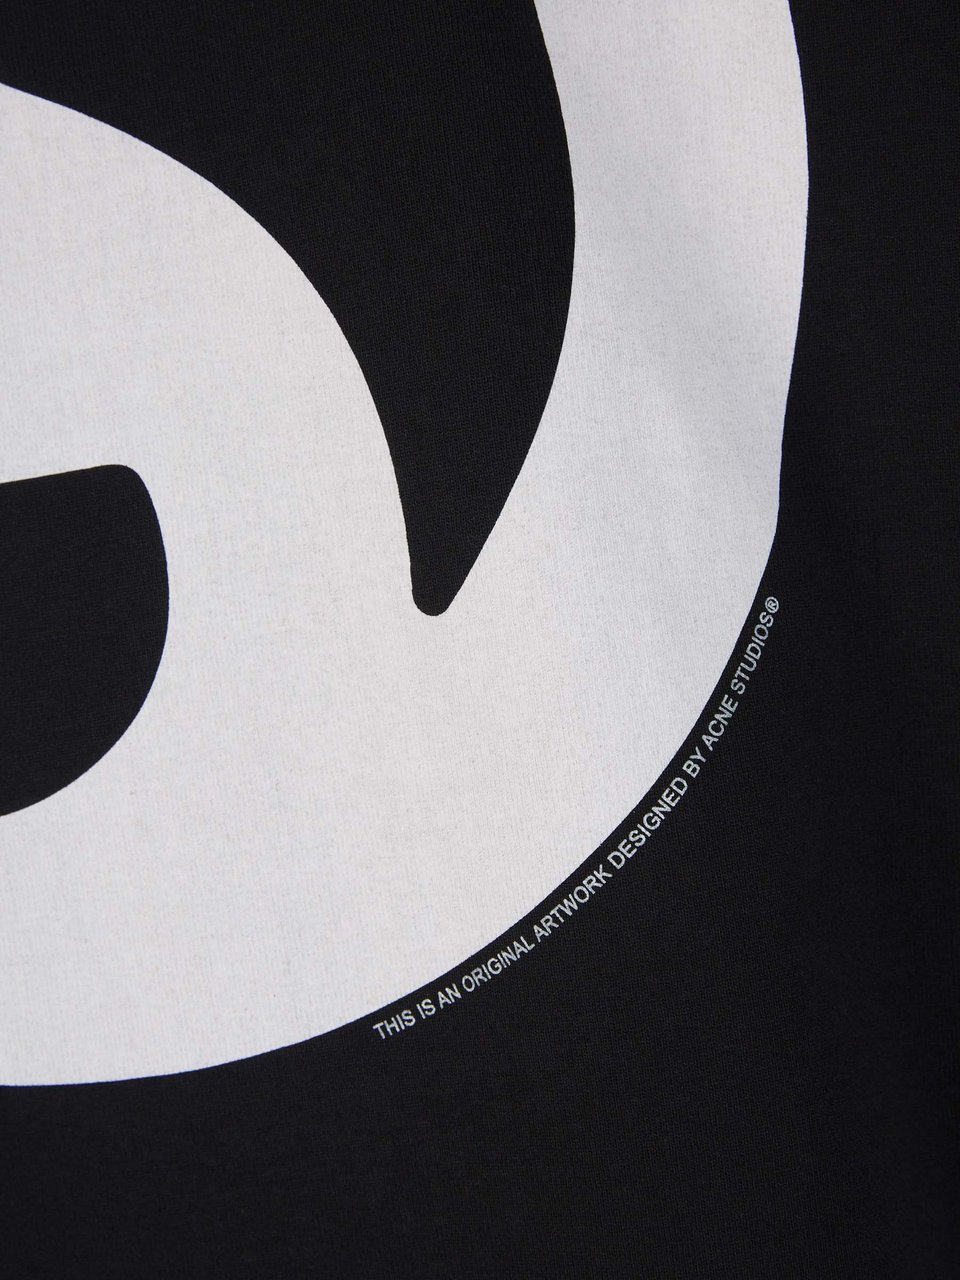 Acne Studios Printed Hood Sweatshirt Zwart